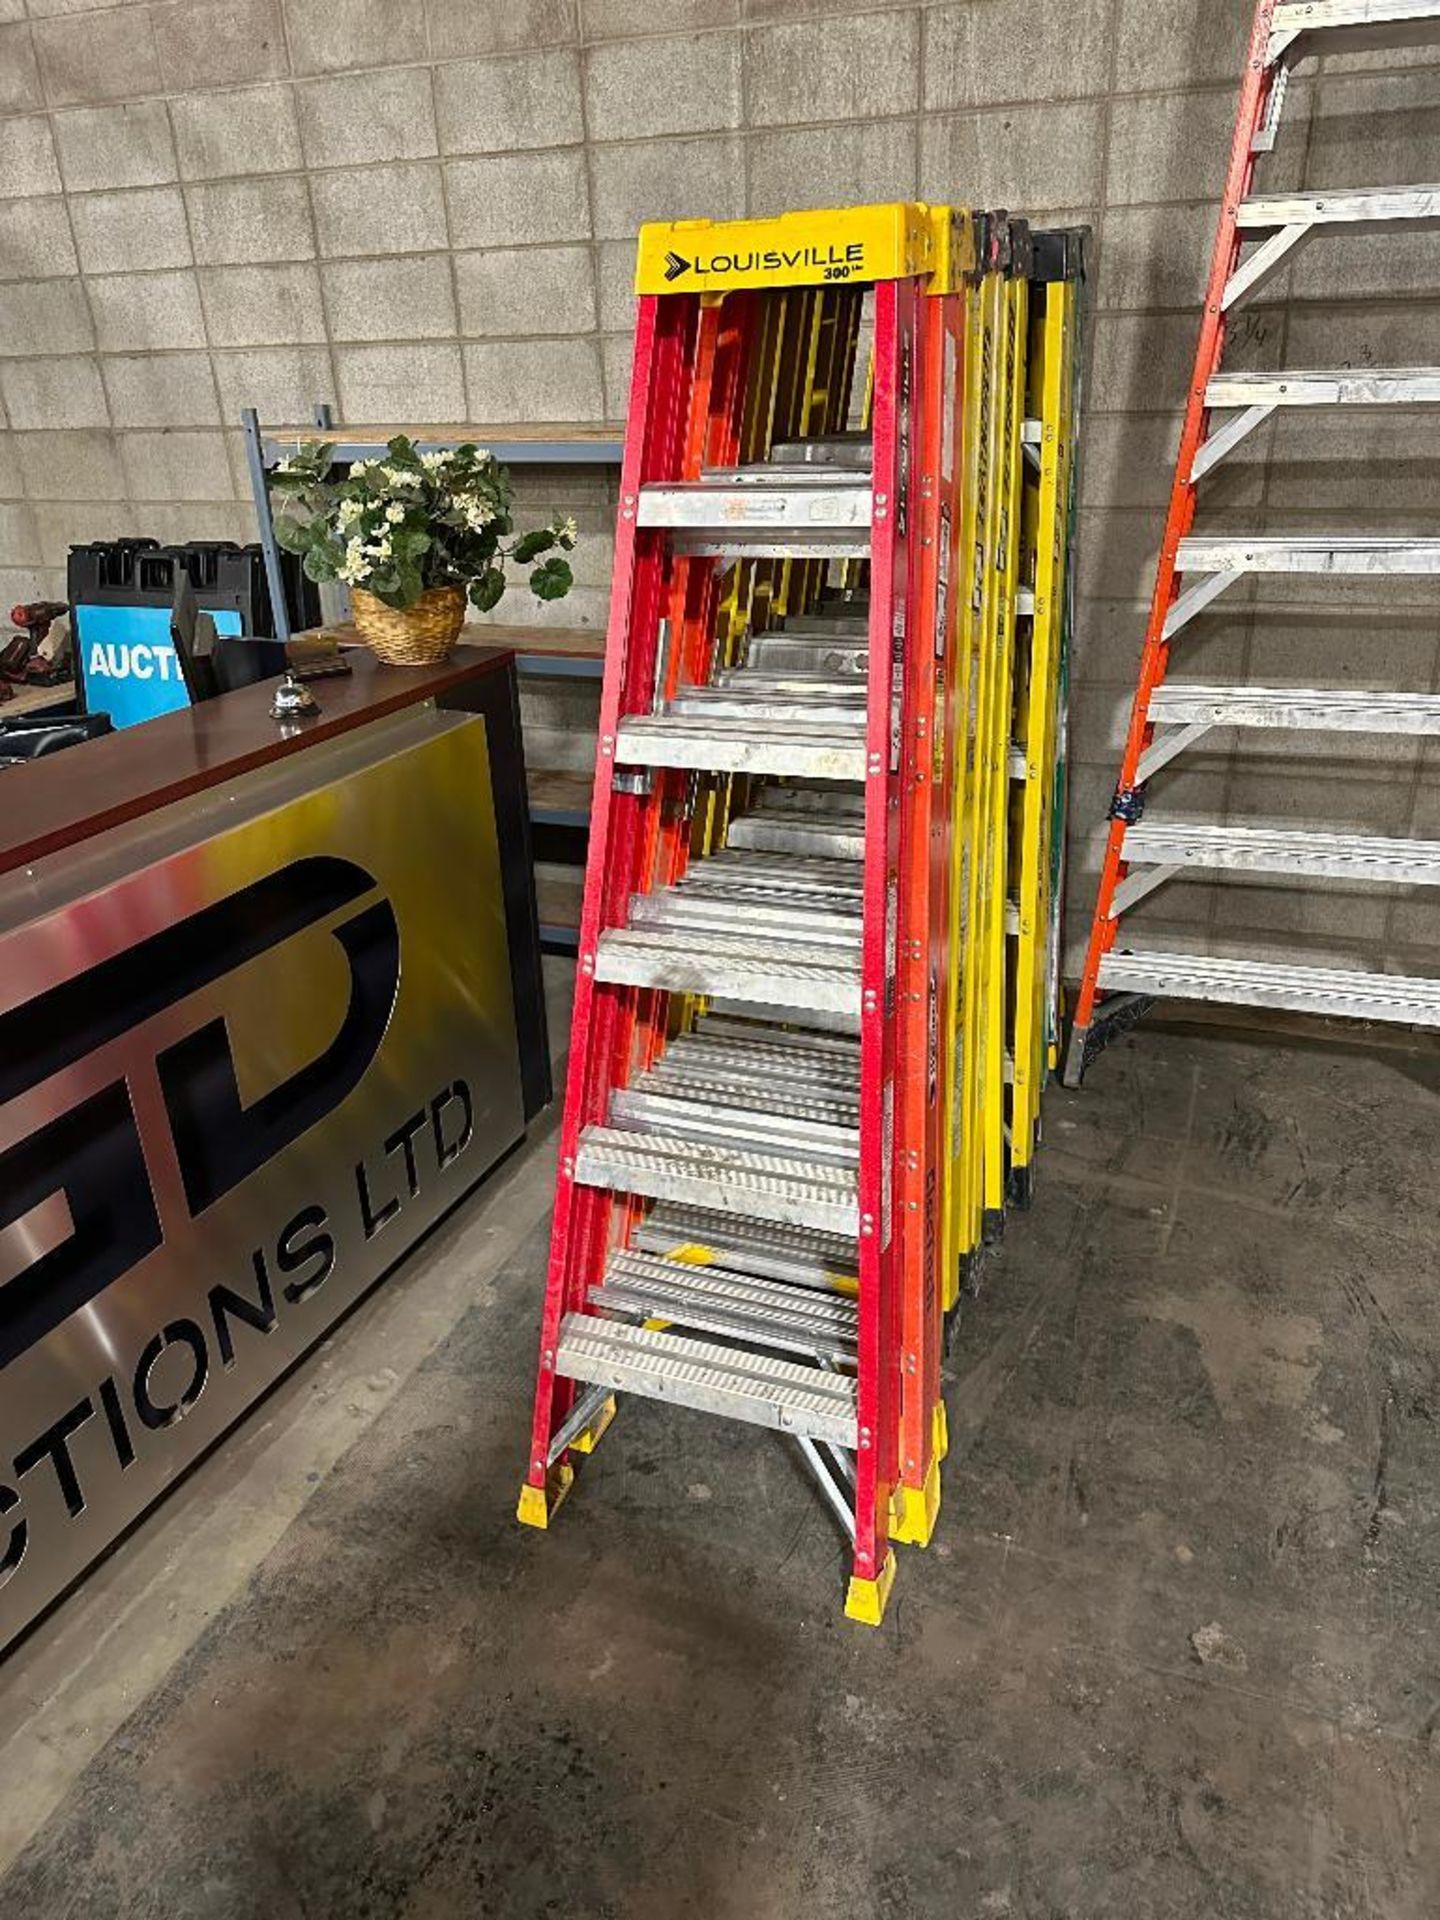 Louisville 6' Fiberglass Step Ladder - Image 3 of 4